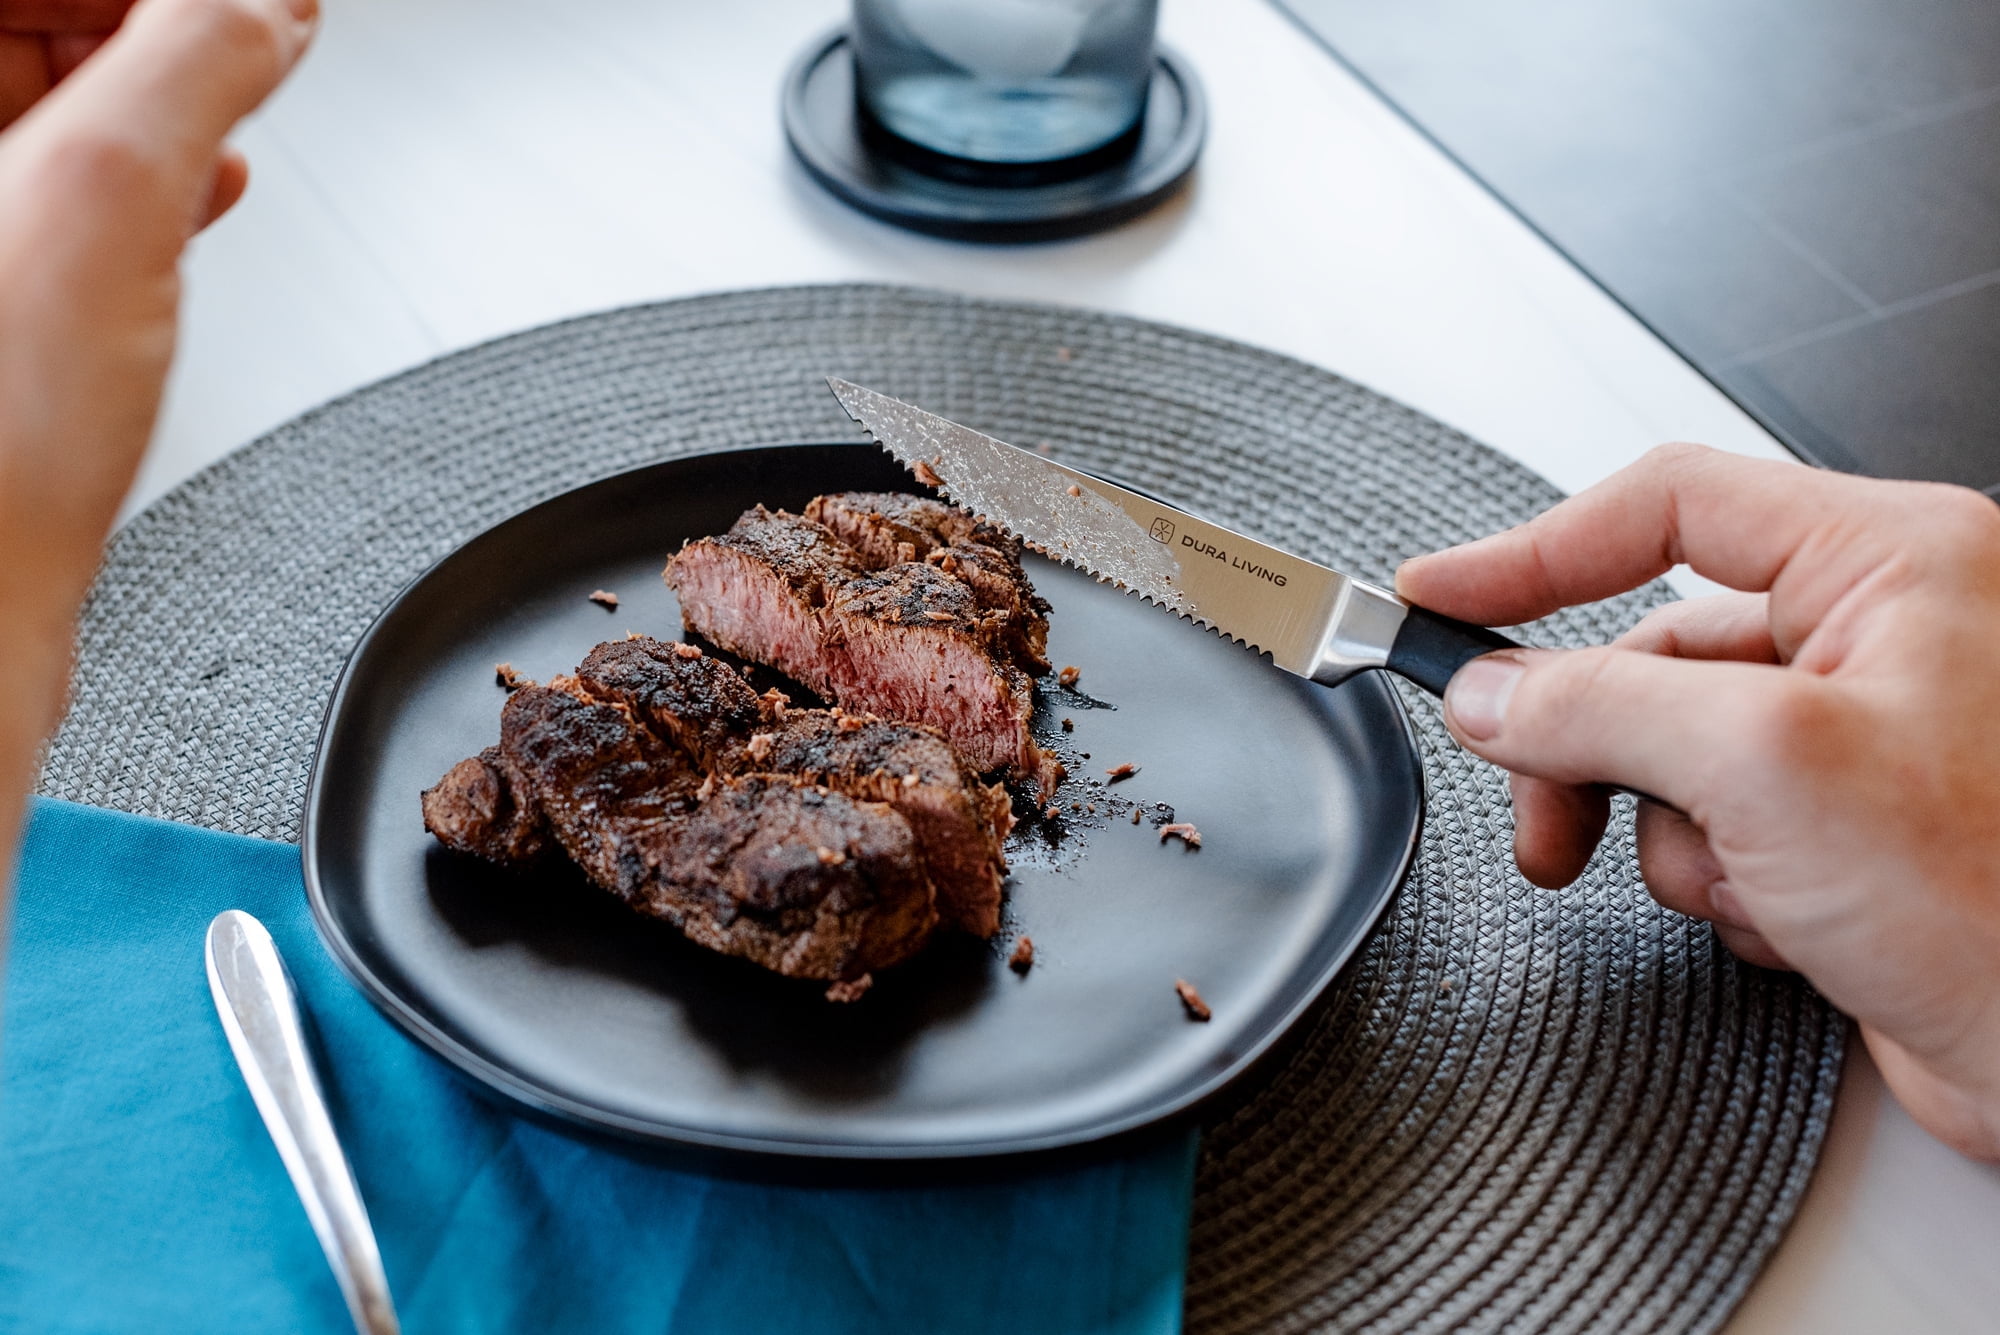 Dura Living Steak Knives - Serrated Steak Knife Set of 8 – Forged High  Carbon Stainless Steel – Full Tang – Ergonomic Handle Design, Grey Knife Set  